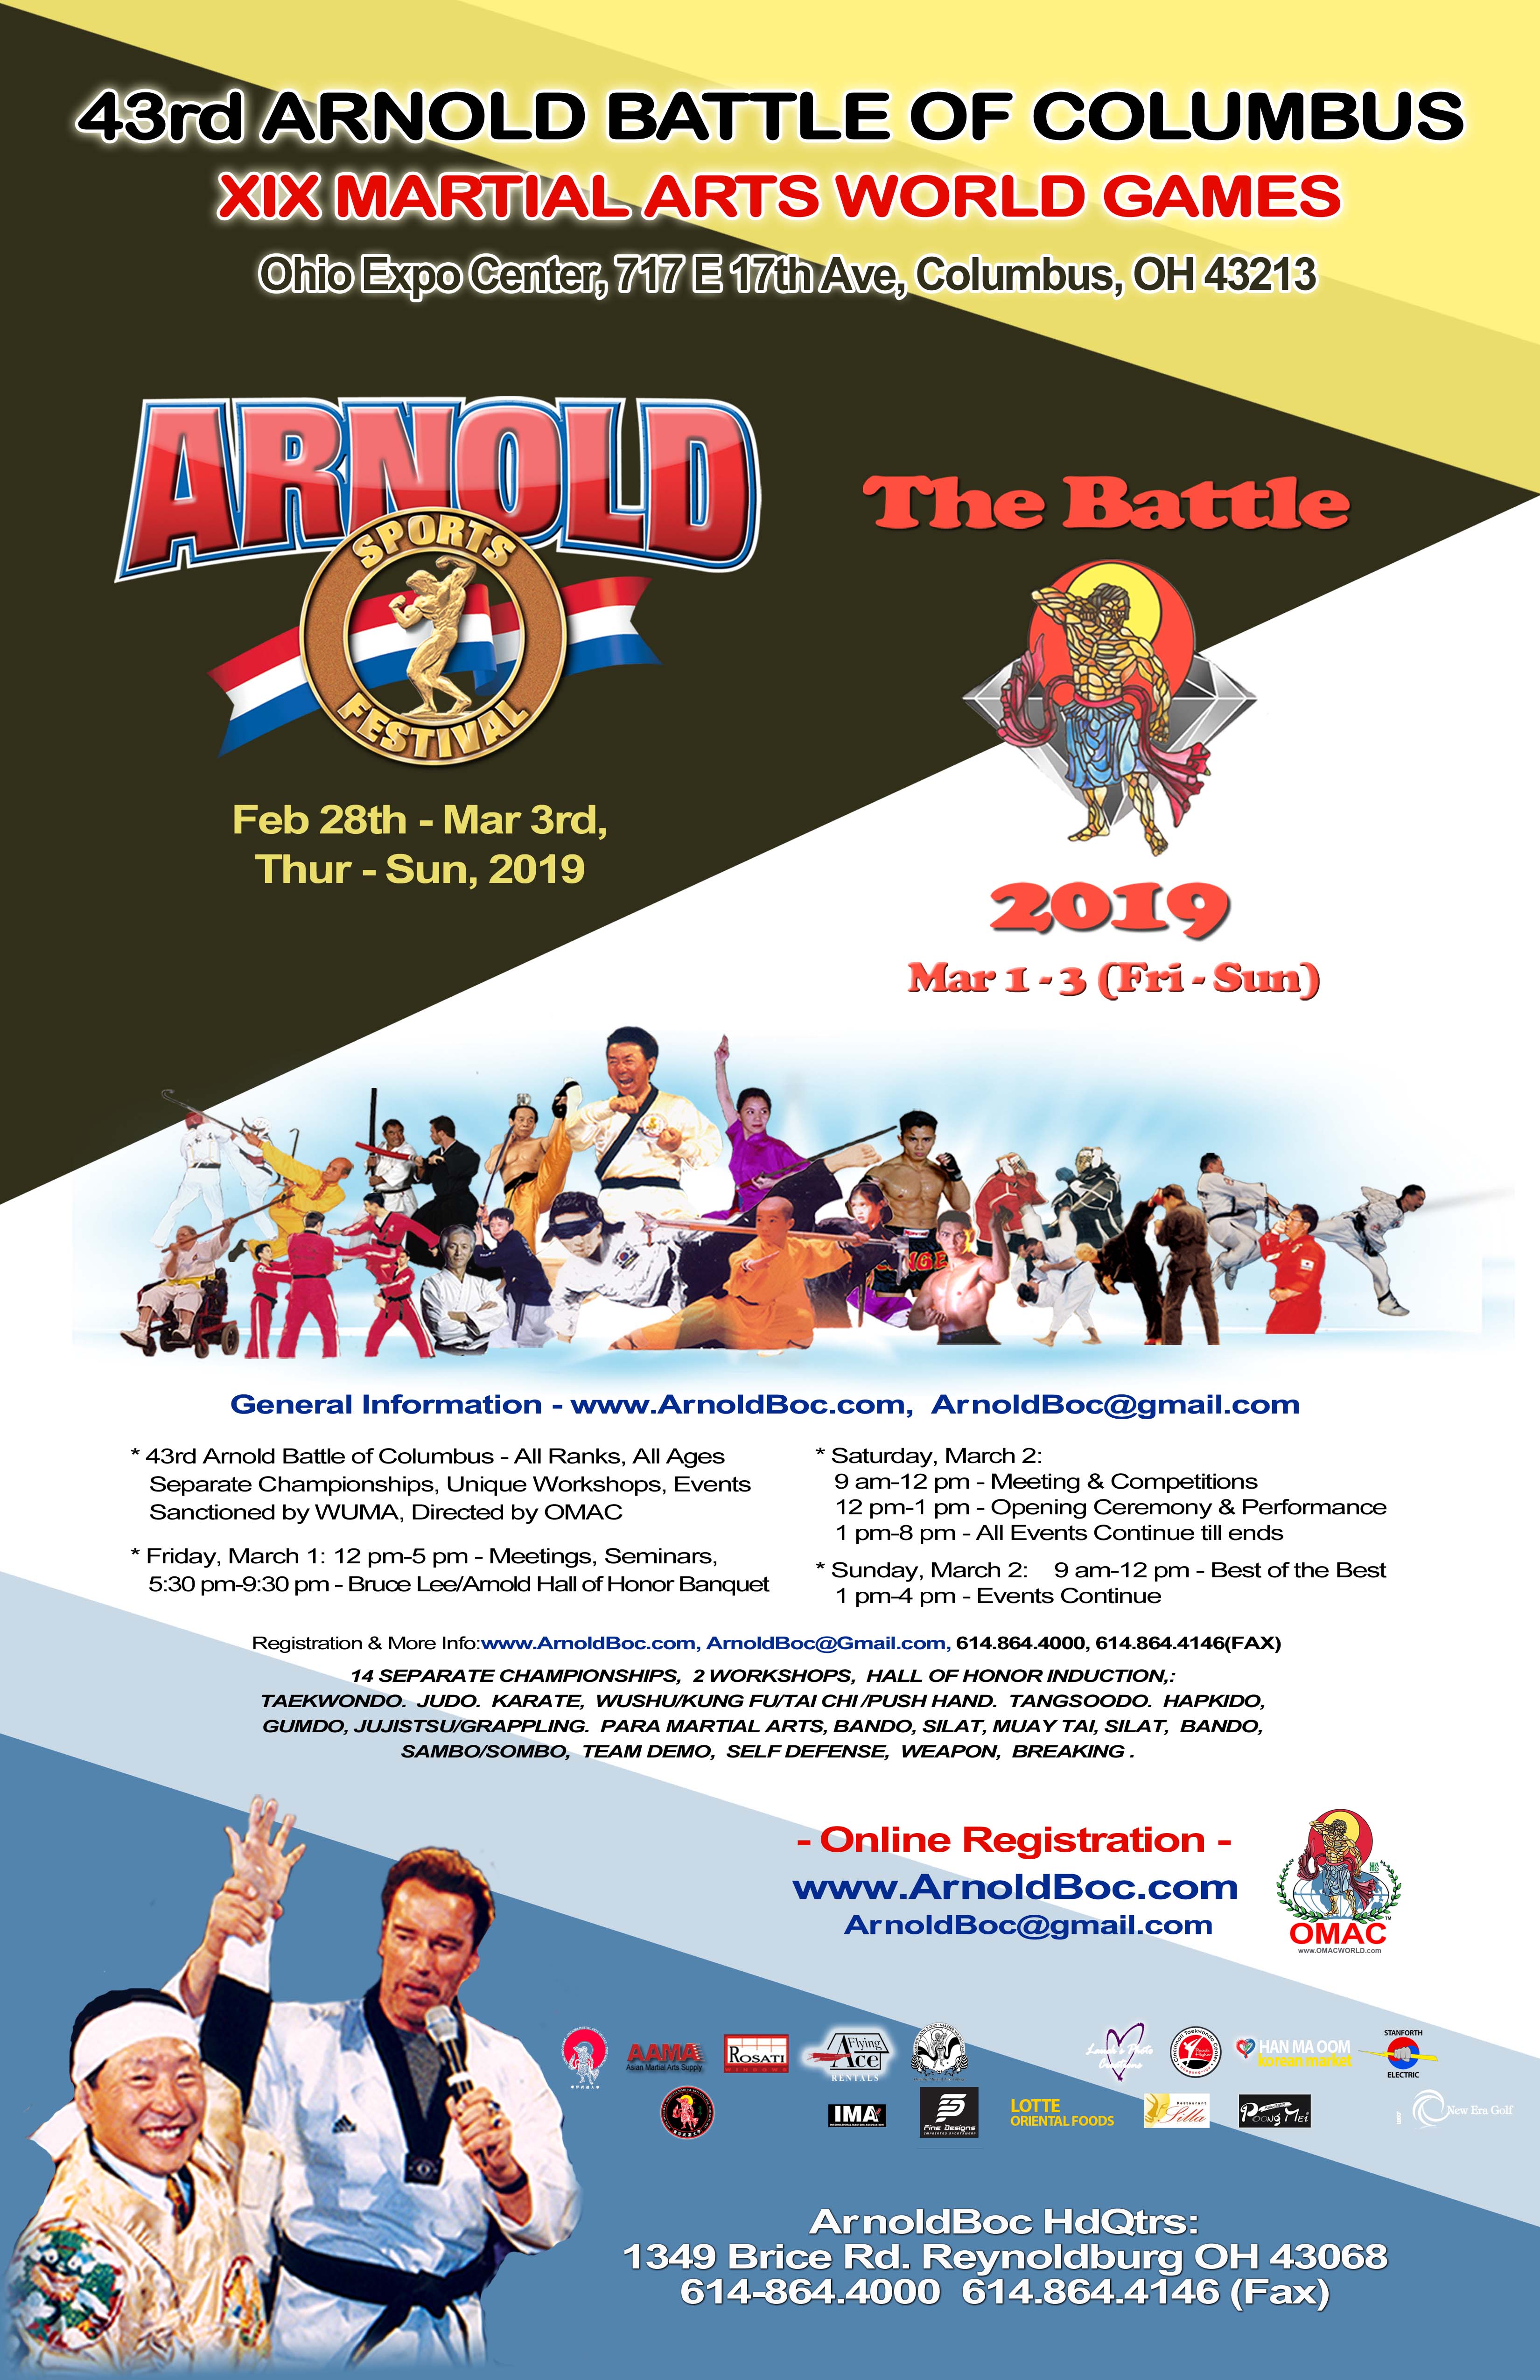 Arnold Battle of Columbus Registration